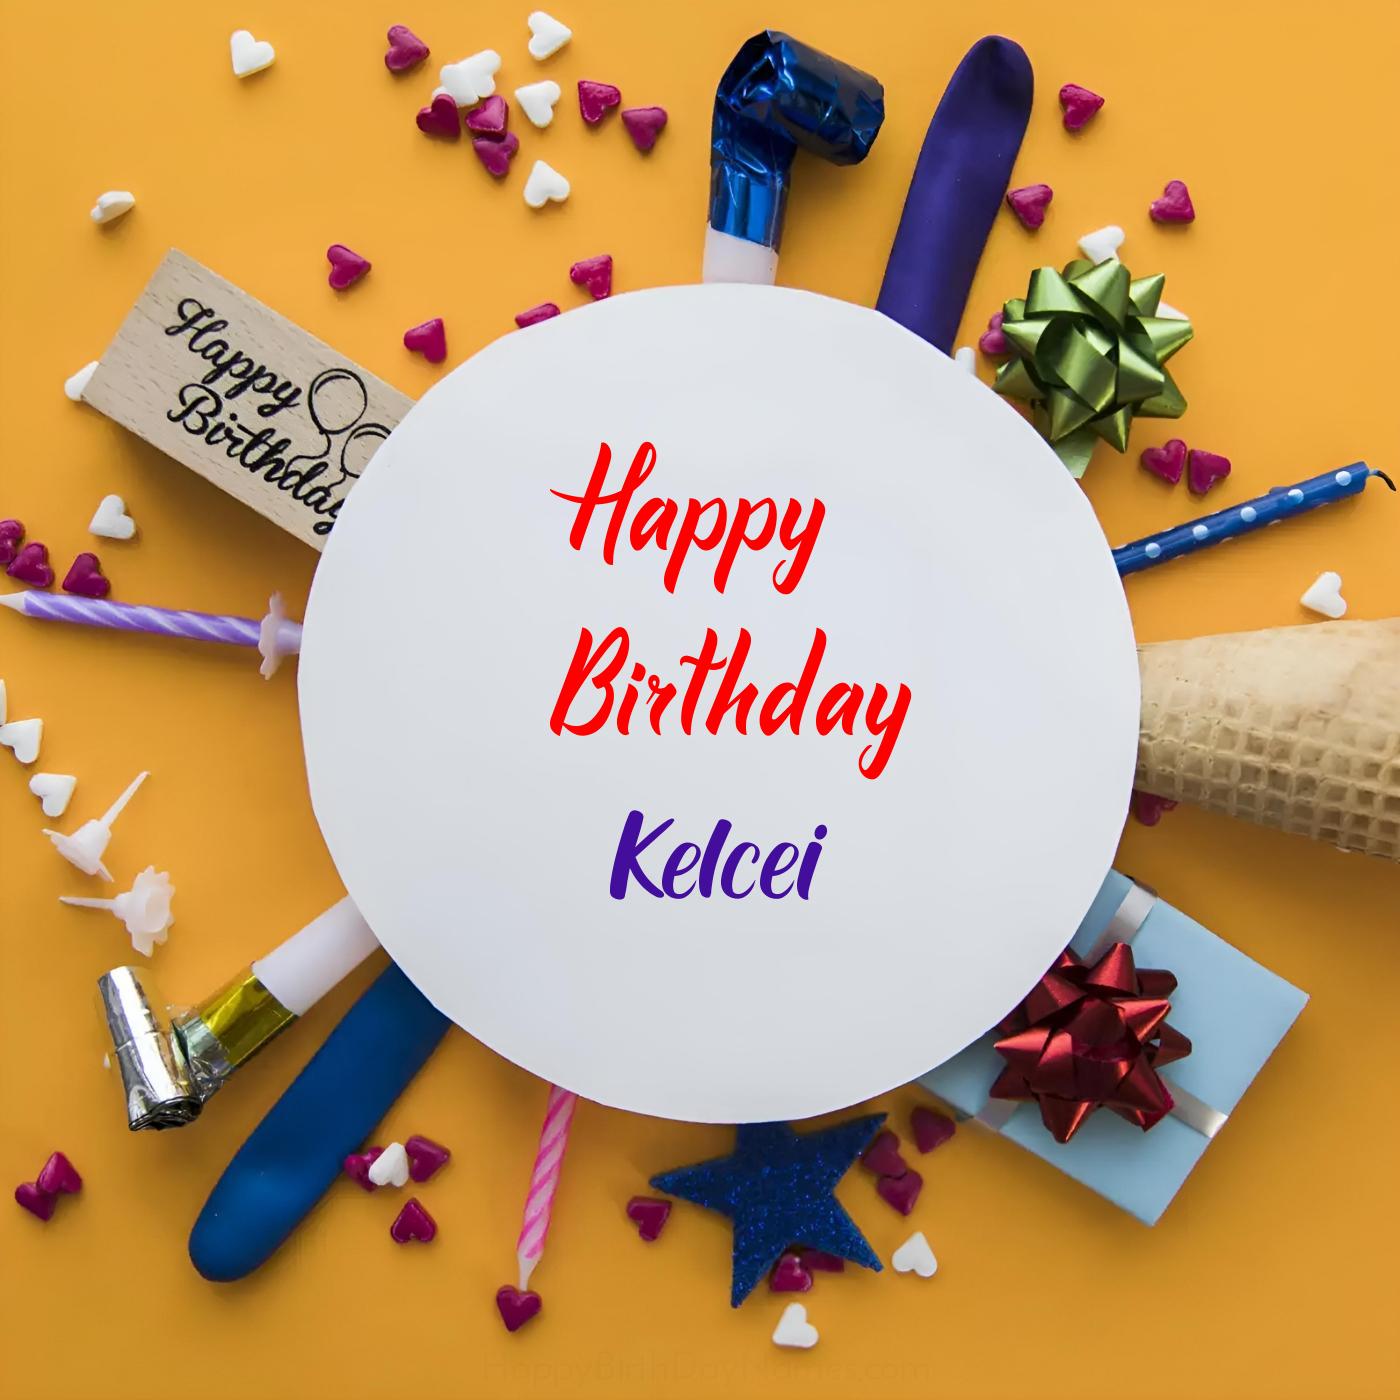 Happy Birthday Kelcei Round Frame Card